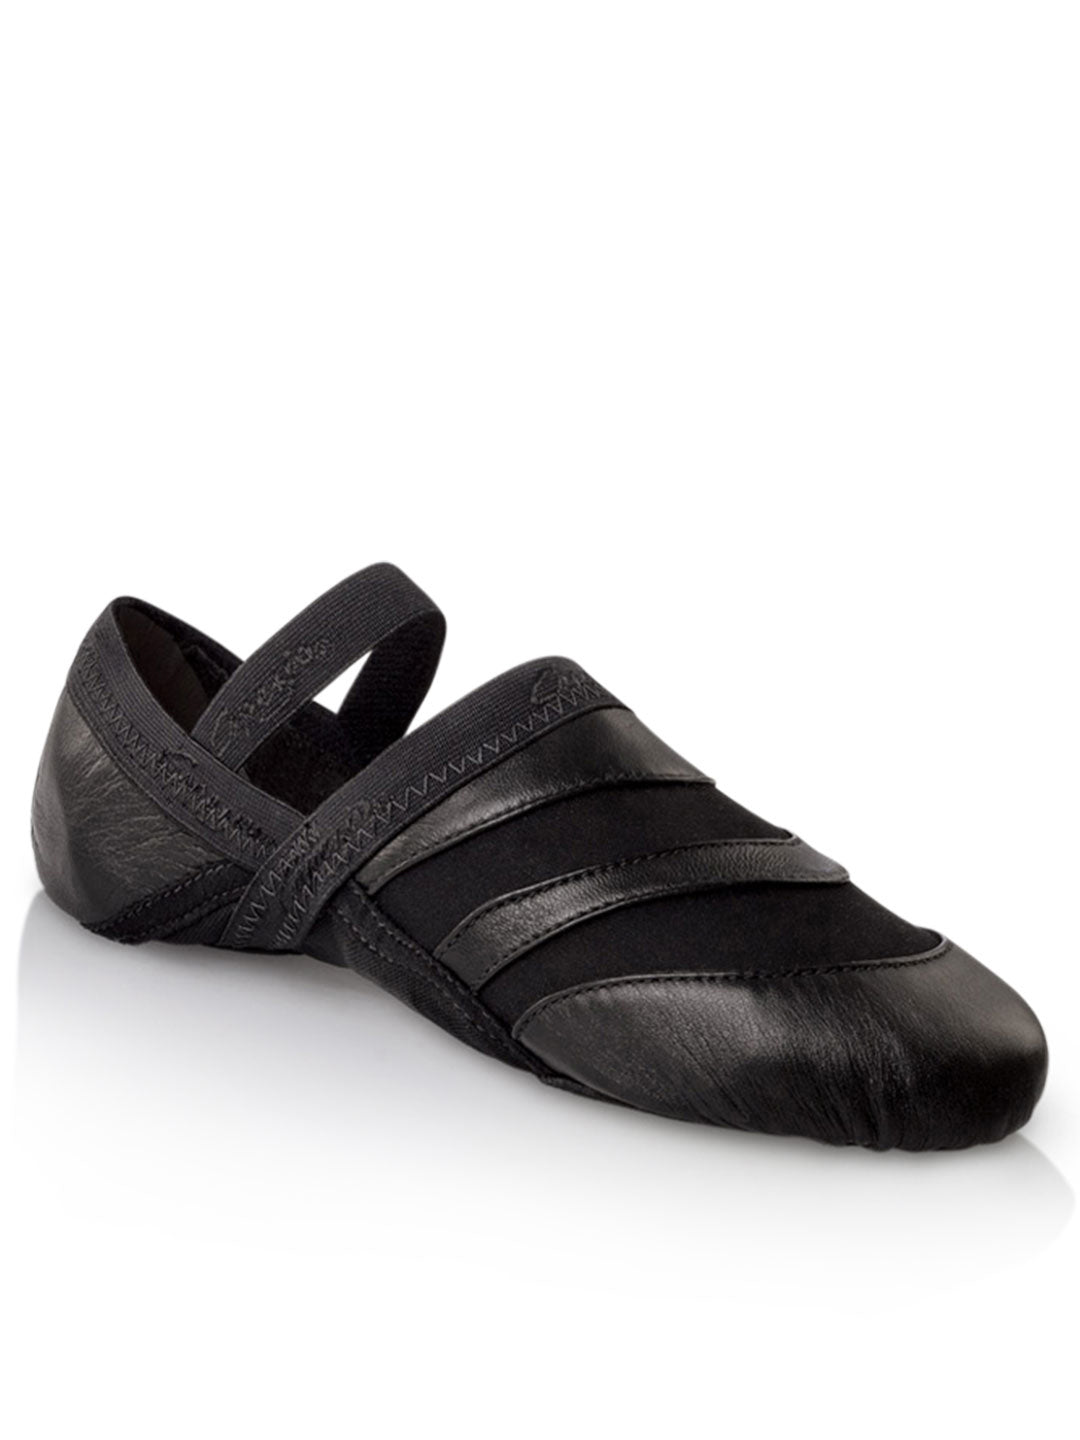 Freeform Ballet Shoe - Black